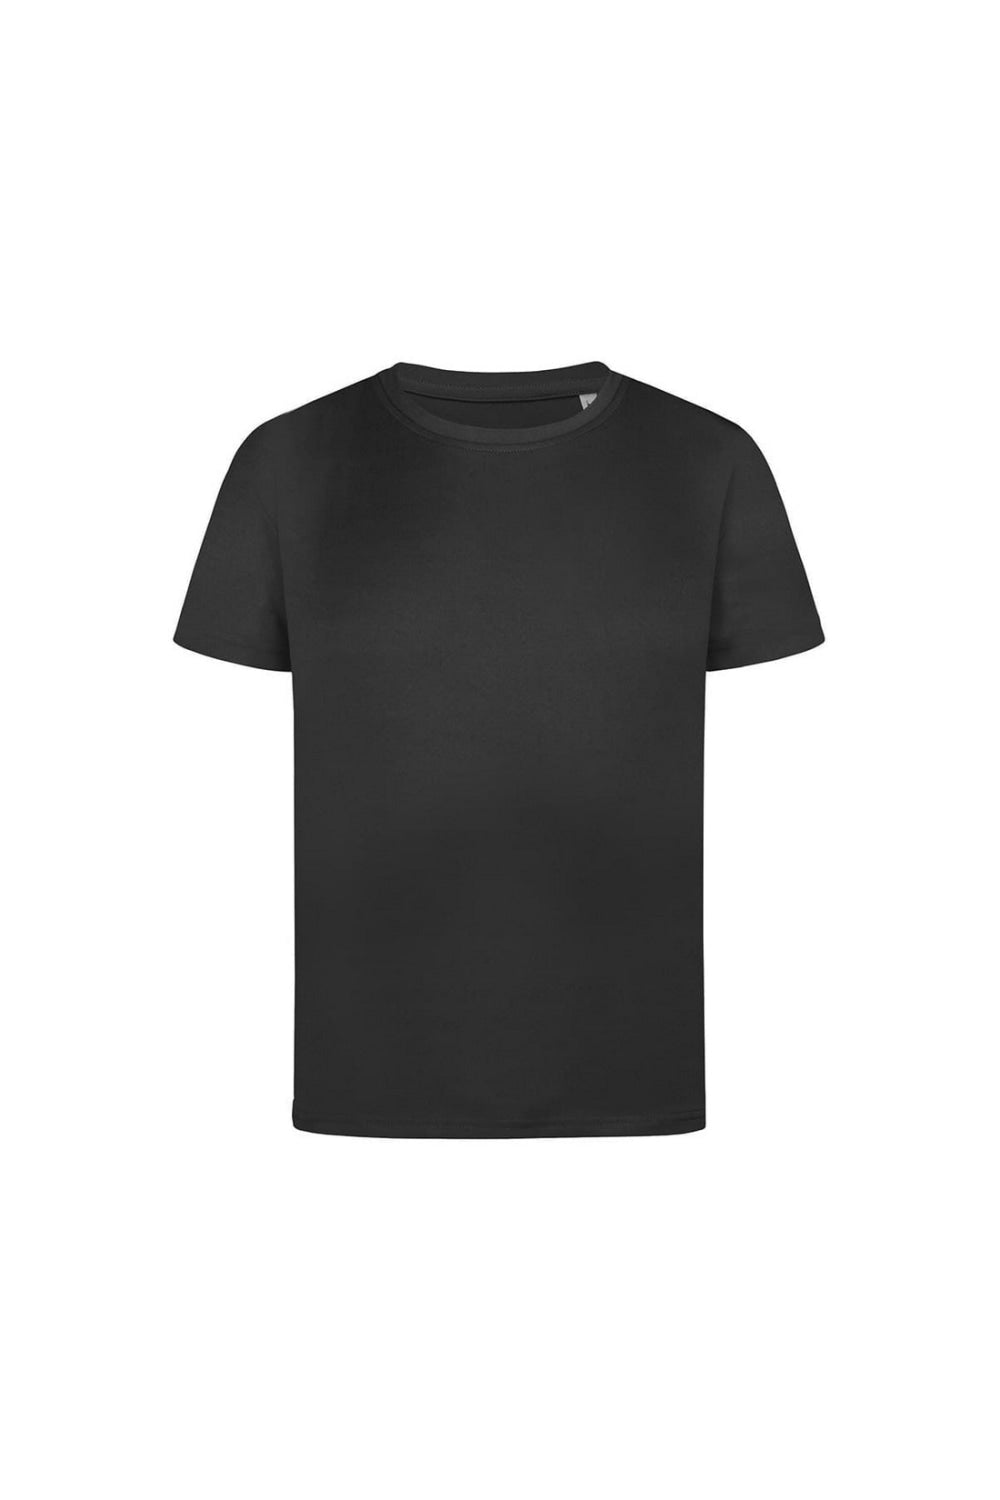 Stedman Childrens/Kids Sports Active T-Shirt (Black Opal)